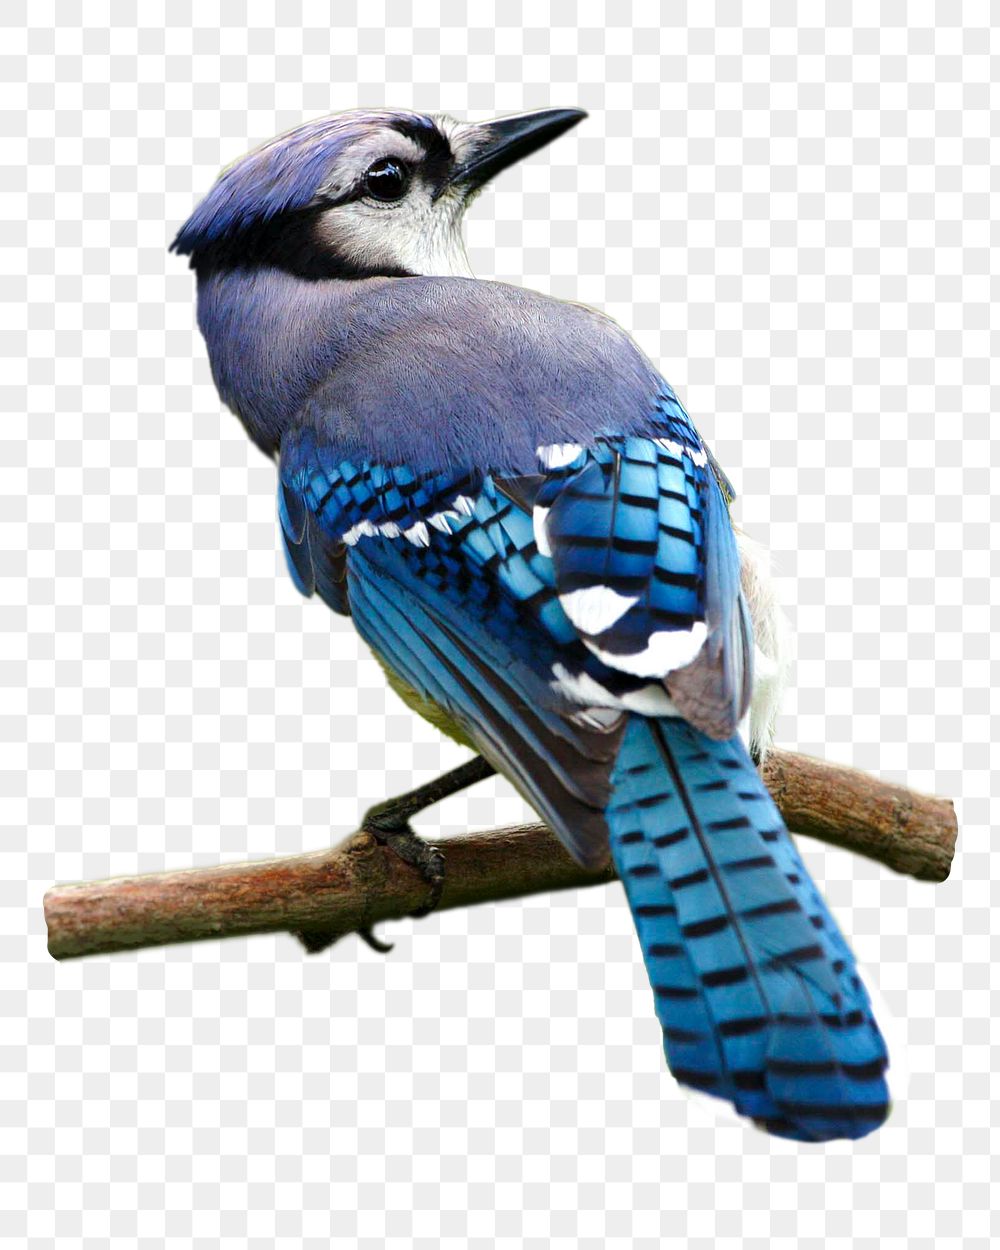 Blue jay bird png, transparent background